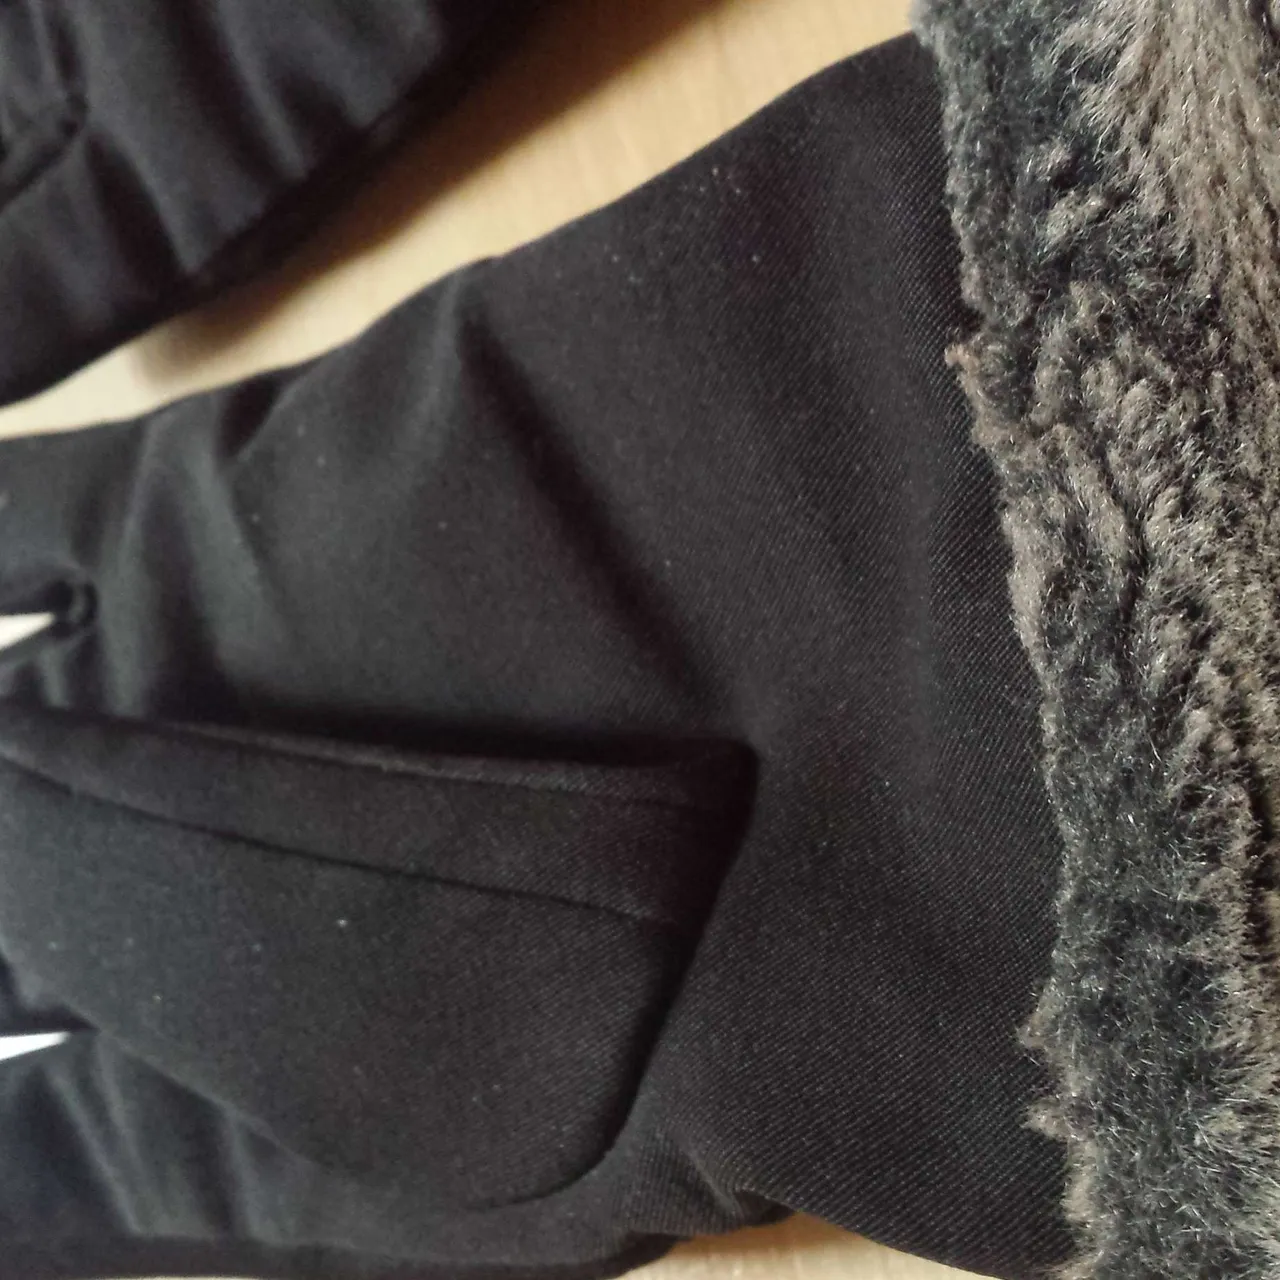 Winter Gear - Mitts, leg warmers, stockings photo 3